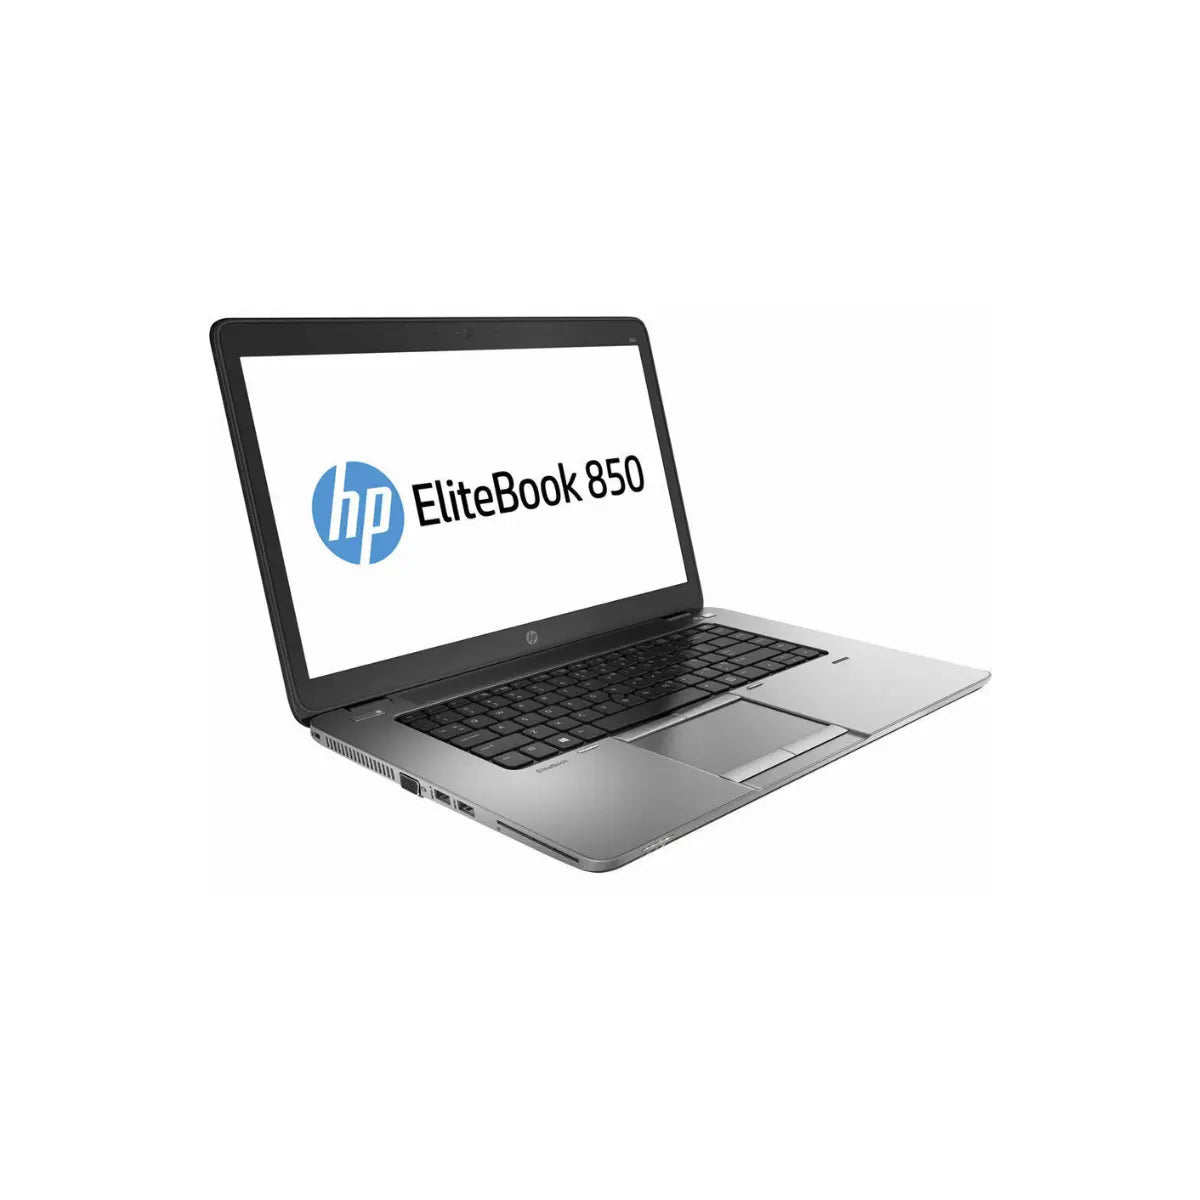 Laptop - HP Elitebook 850 G1 | i5 4ta Gen. | 8 GB RAM 240 GB SSD | 15.6" - PC ONE MÉXICOHPLaptop